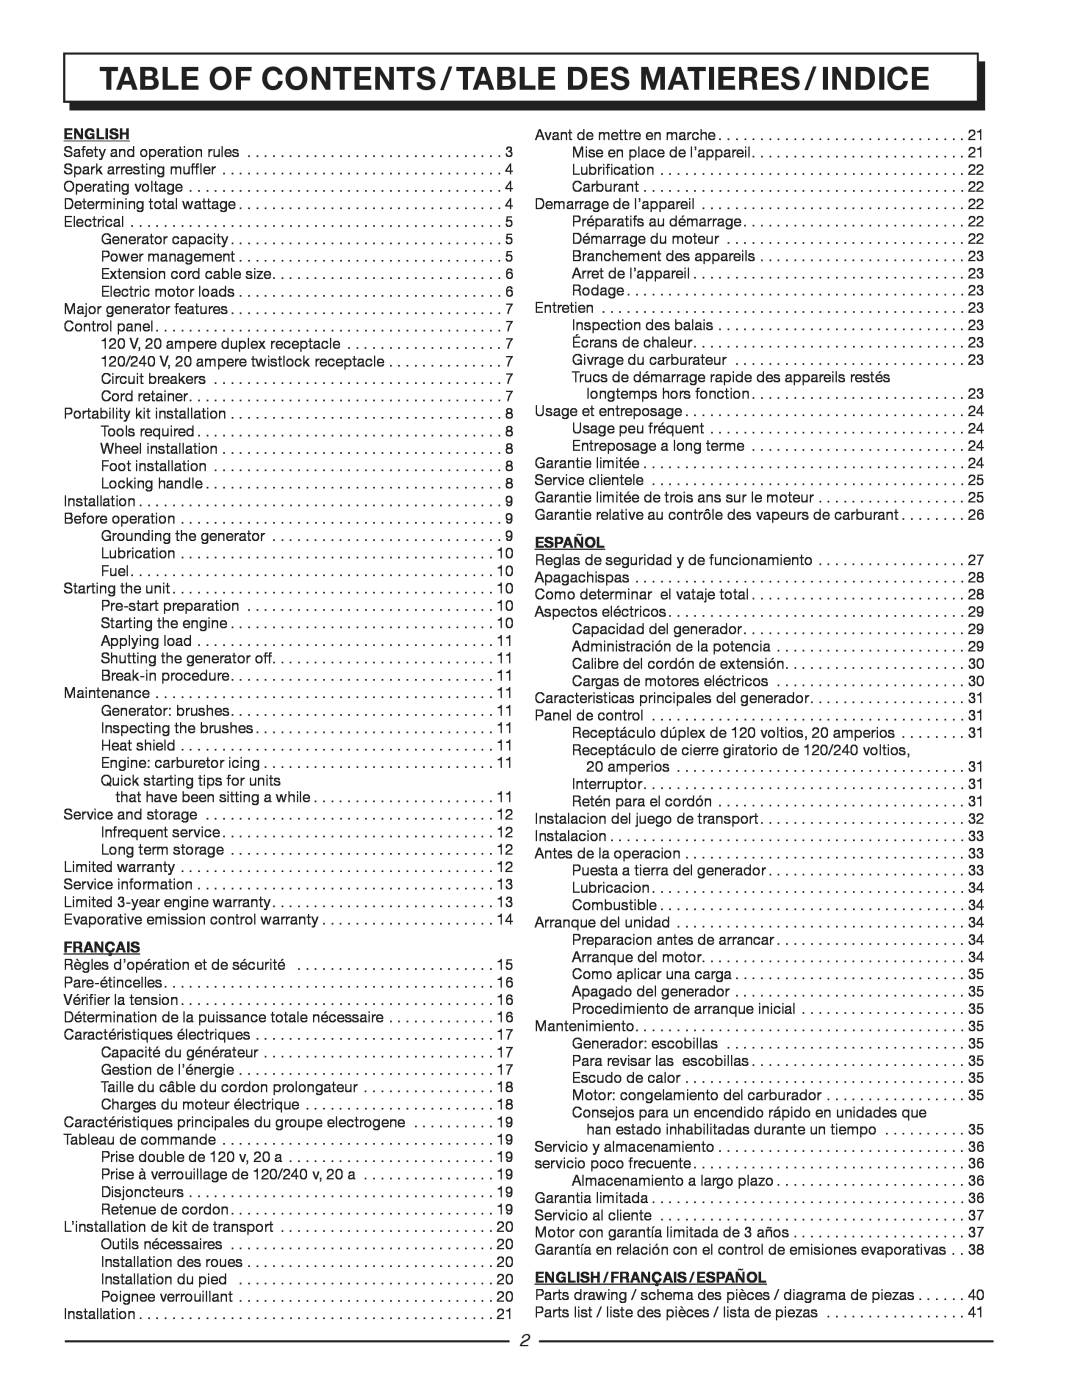 Homelite HG3510 table of contents / TABLE DES MATIERES / INDICE, English, english / Français / Español 